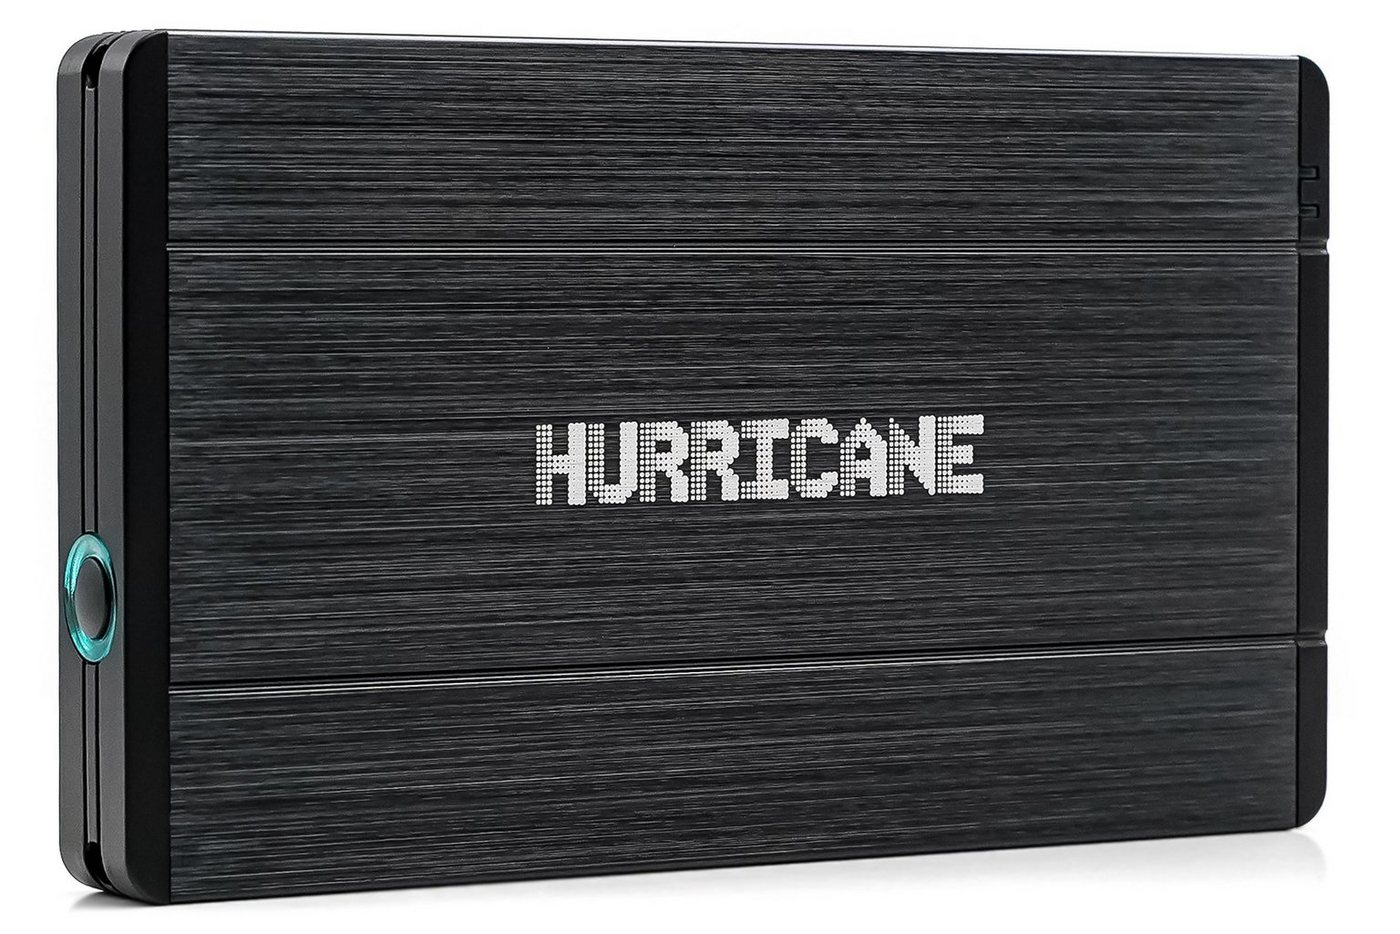 HURRICANE Hurricane 12.5mm GD25650 500GB 2.5 USB 3.0 Externe Aluminium Festpla externe HDD-Festplatte" von HURRICANE